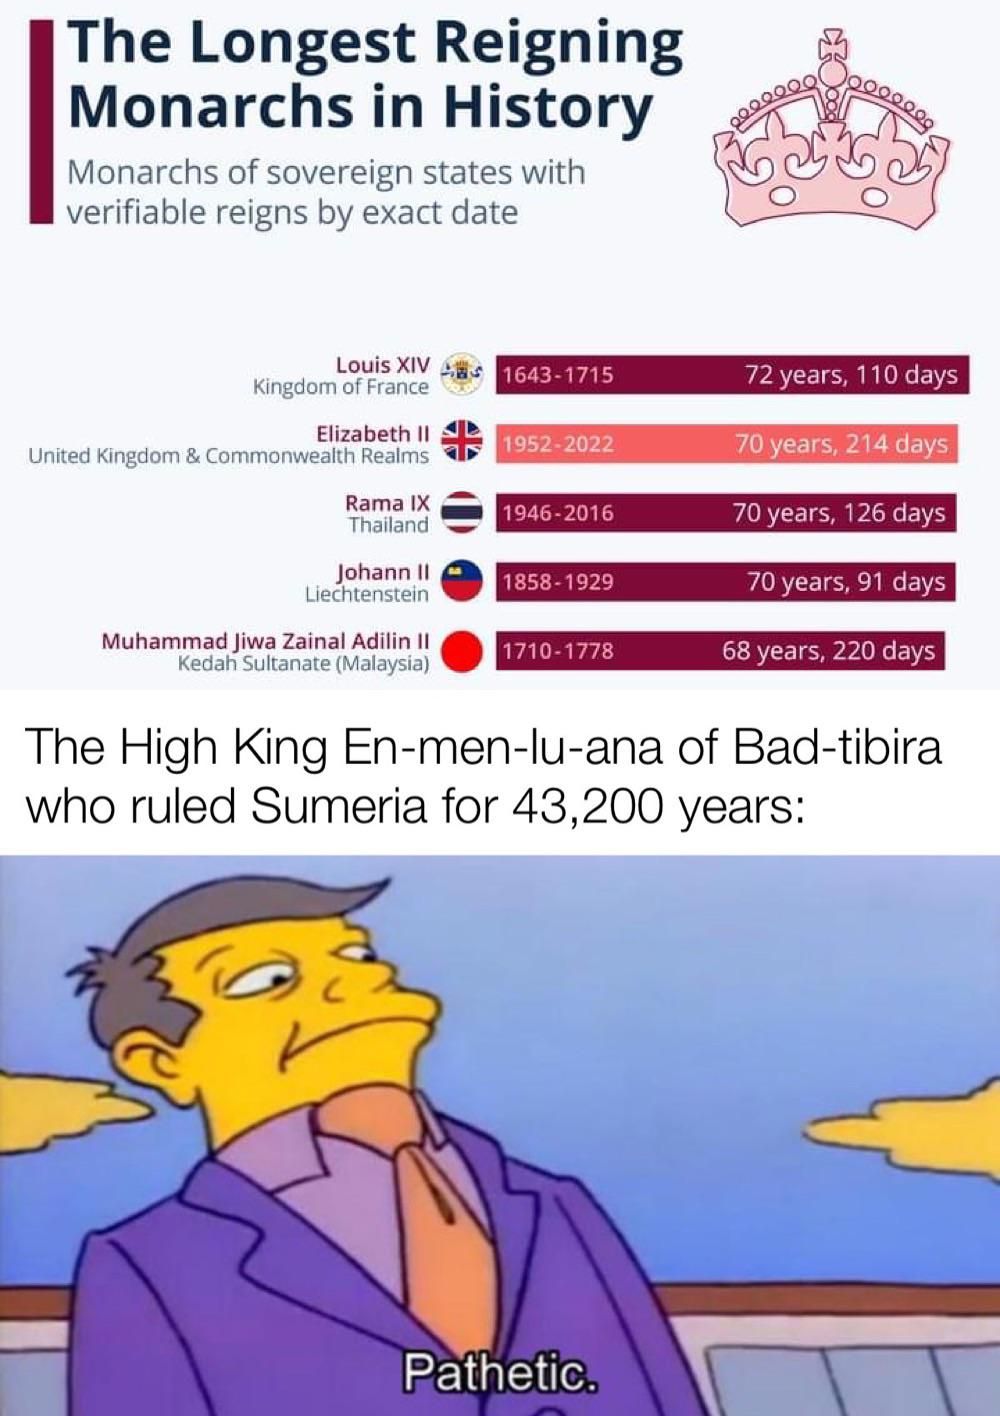 Sumerian Kings list is wild.